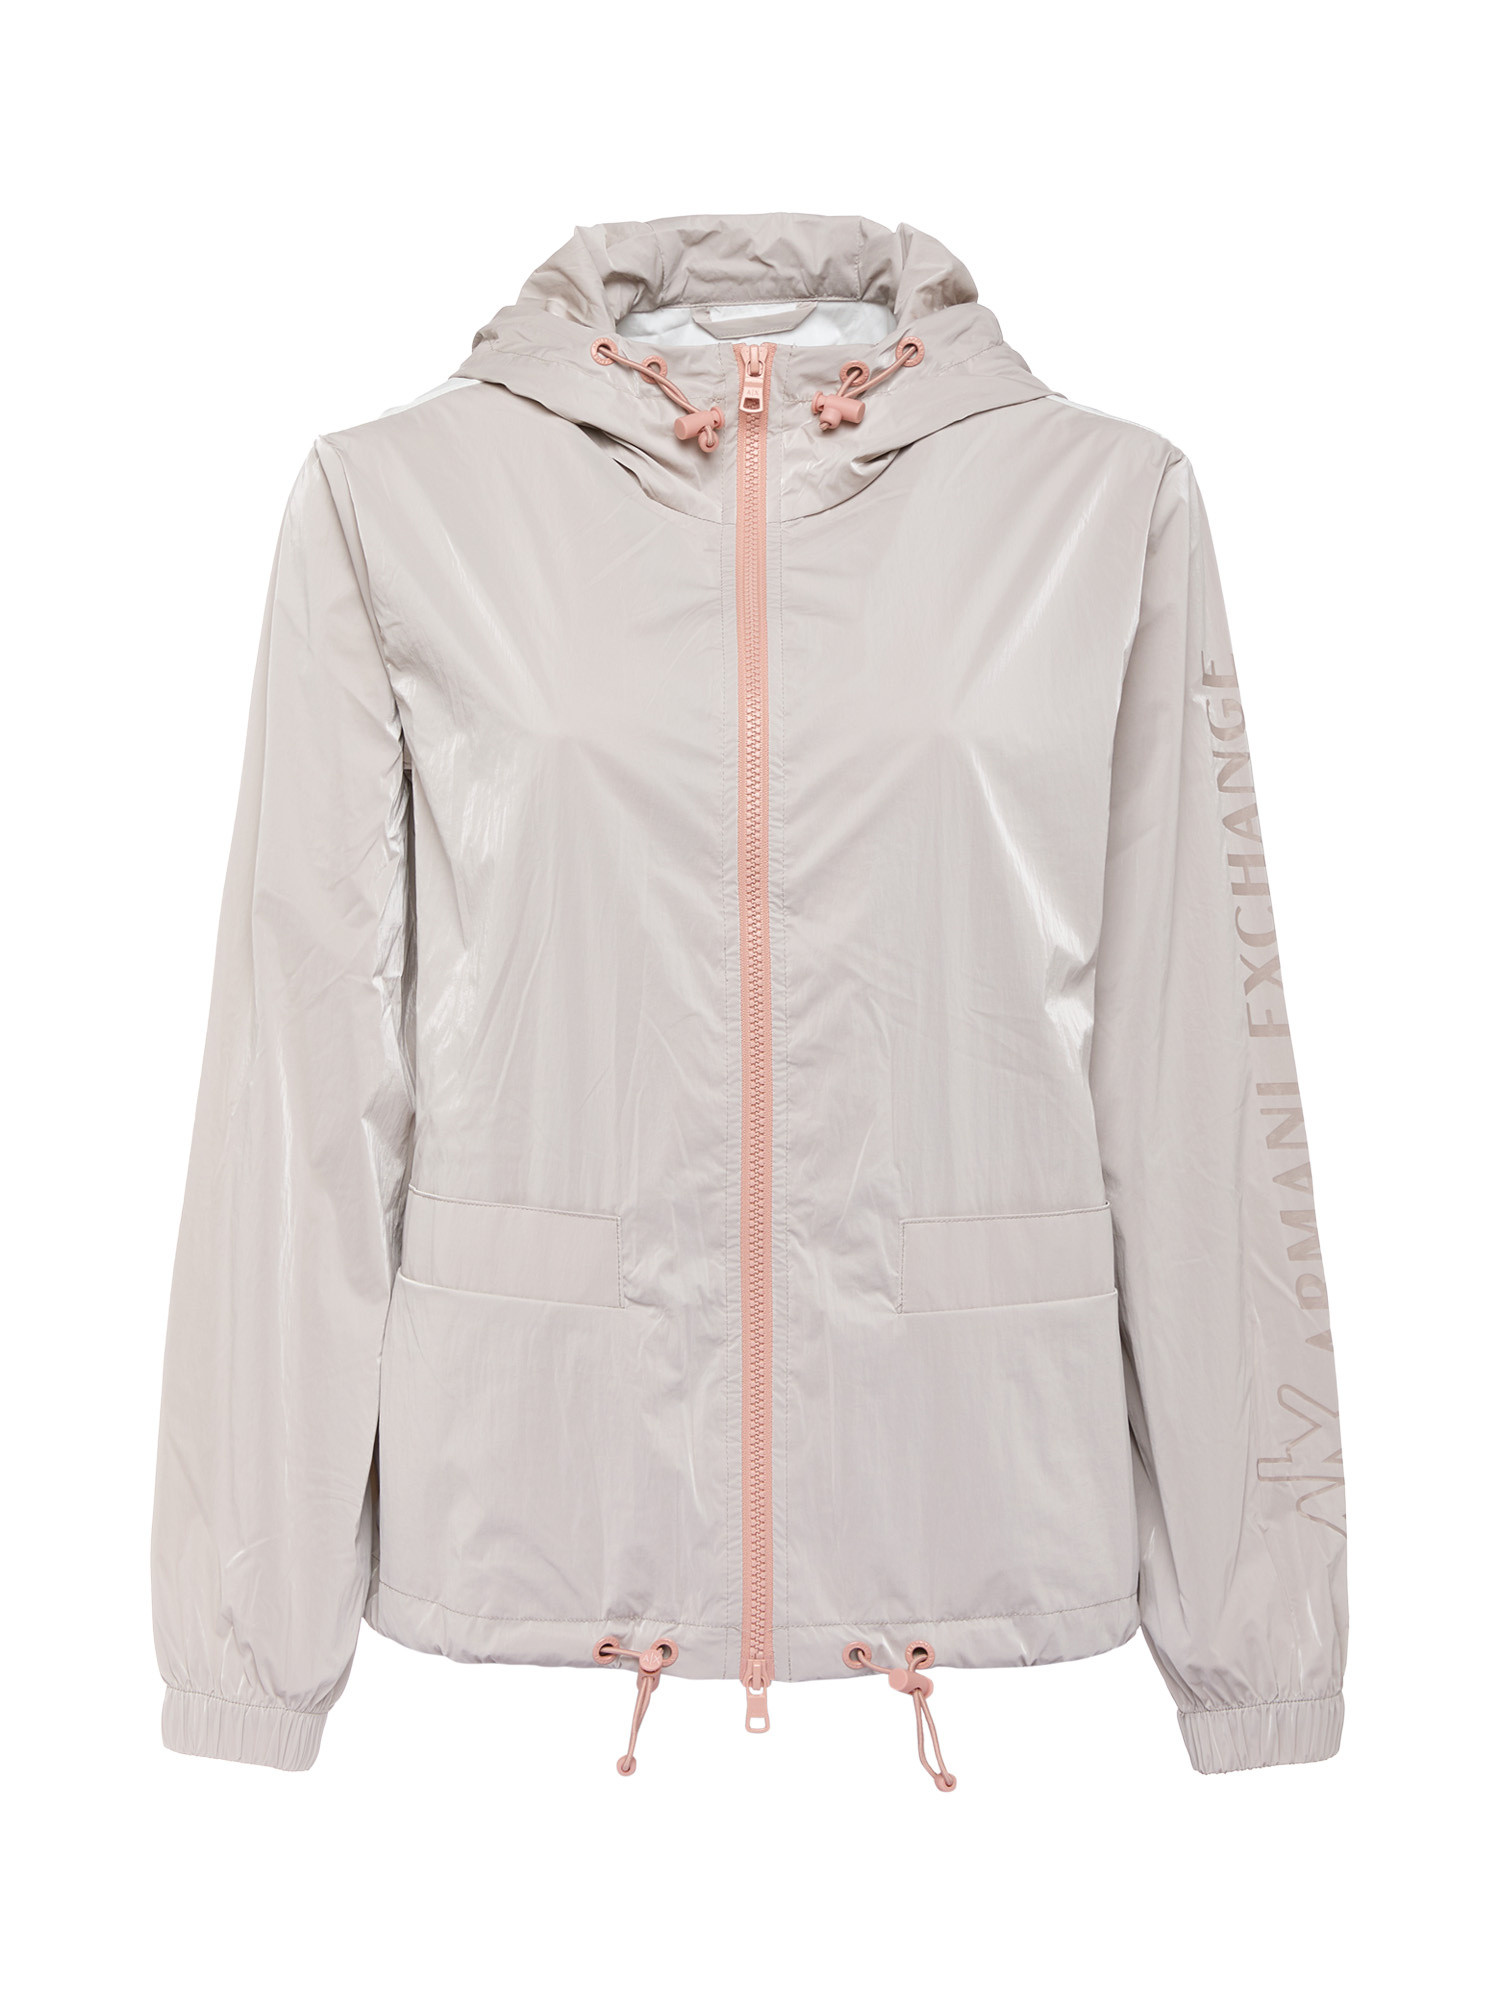 Armani Exchange - Nylon jacket with hood and logo, Light Beige, large image number 0